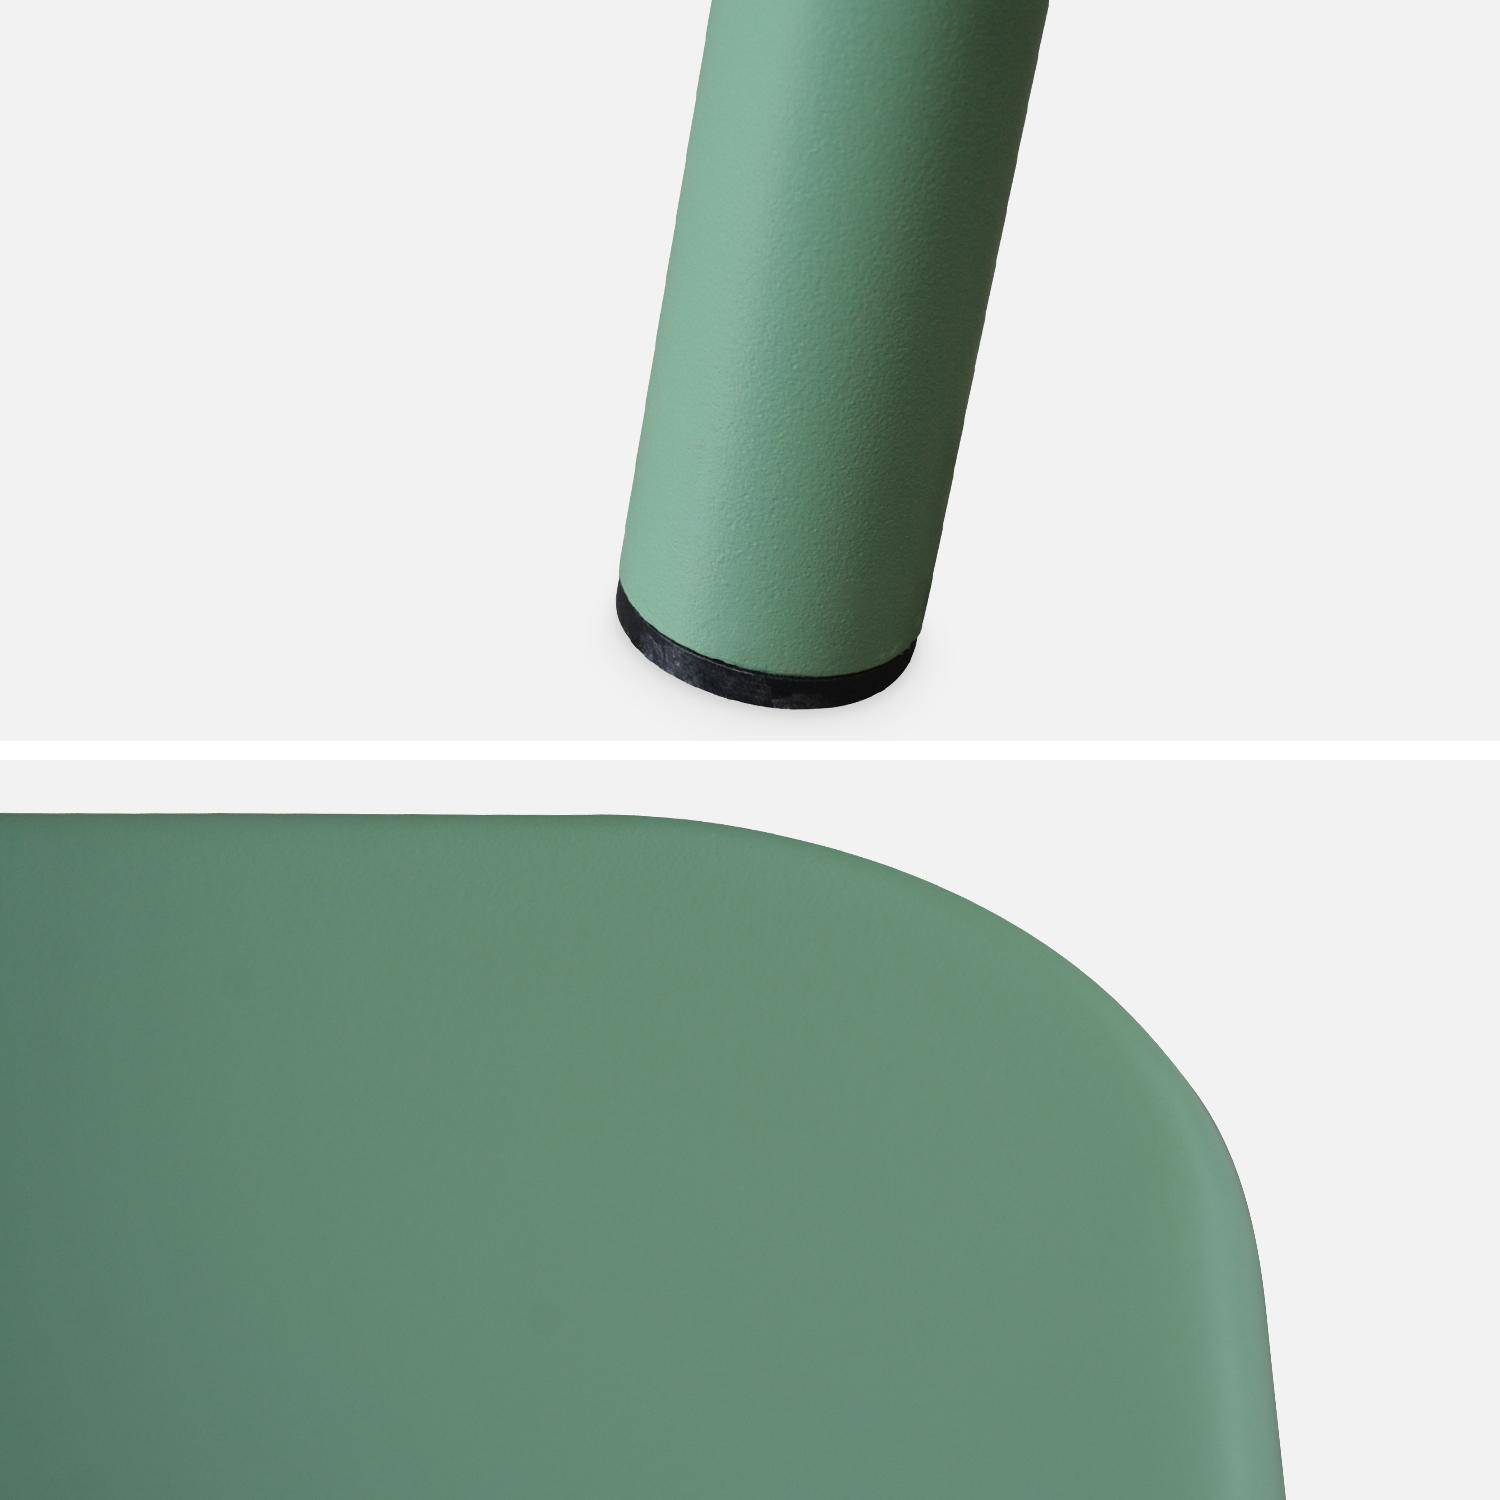 Table de jardin en métal 160x90cm + 4 chaises empilables et 2 fauteuils vert jade,sweeek,Photo7